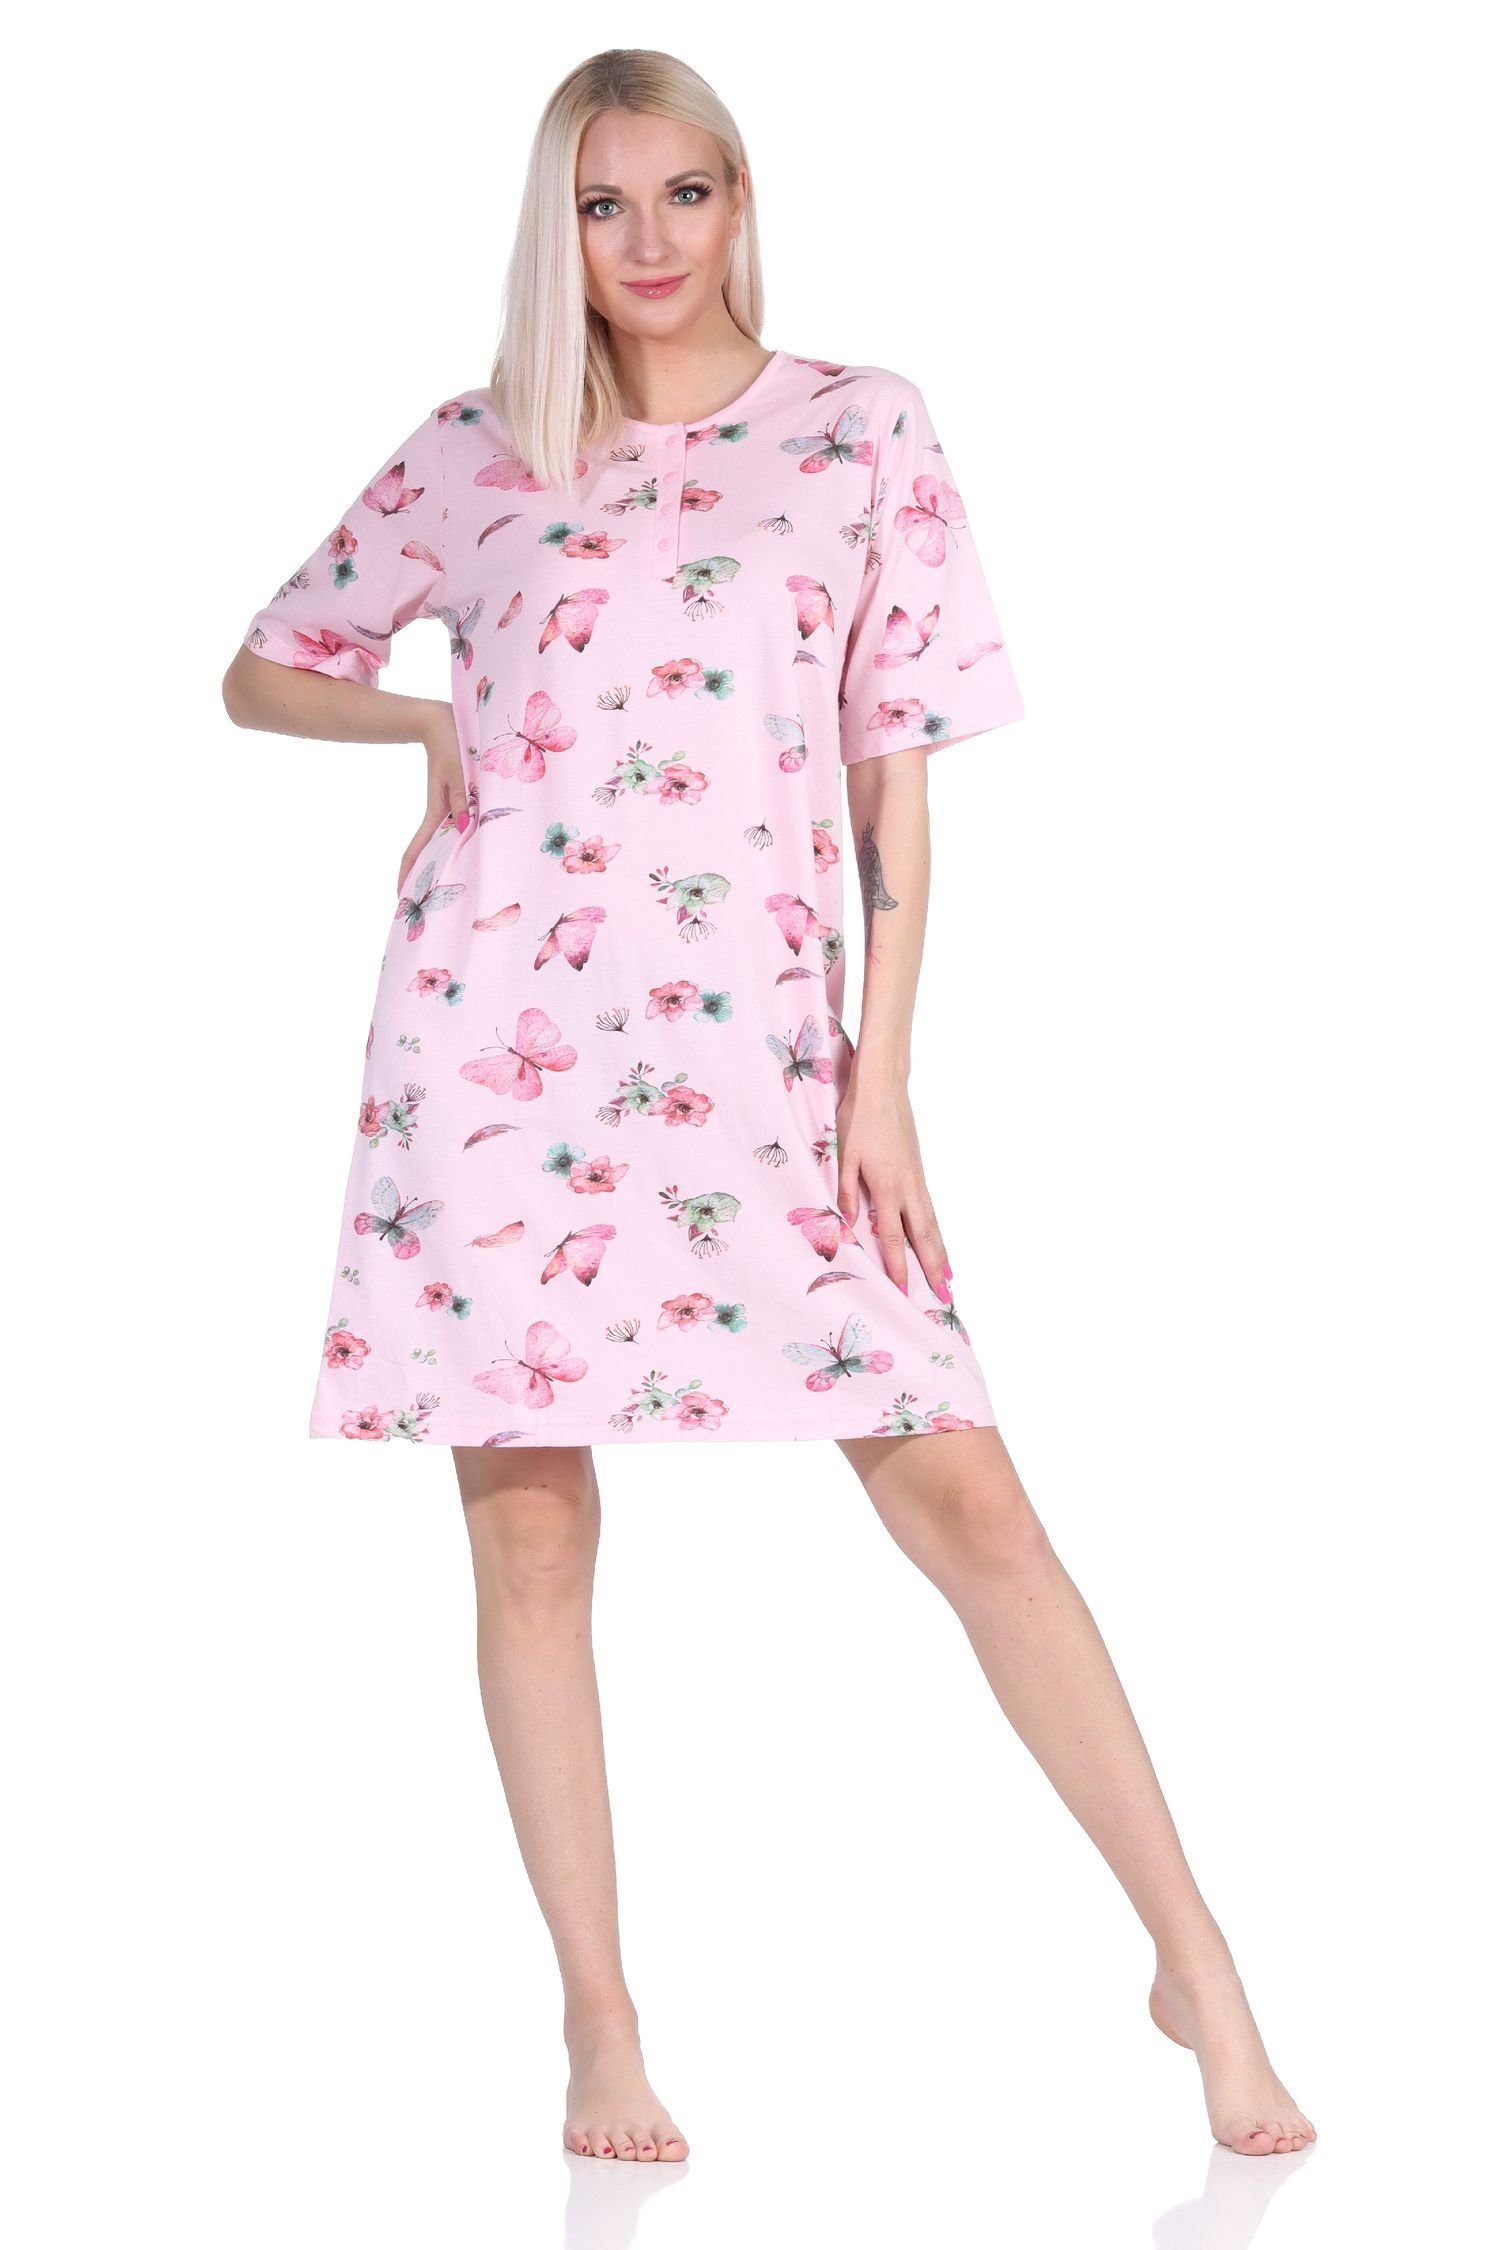 Normann Nachthemd Damen kurzarm Nachthemd in floralem Schmetterlings Print - 122 212 rosa | Nachthemden